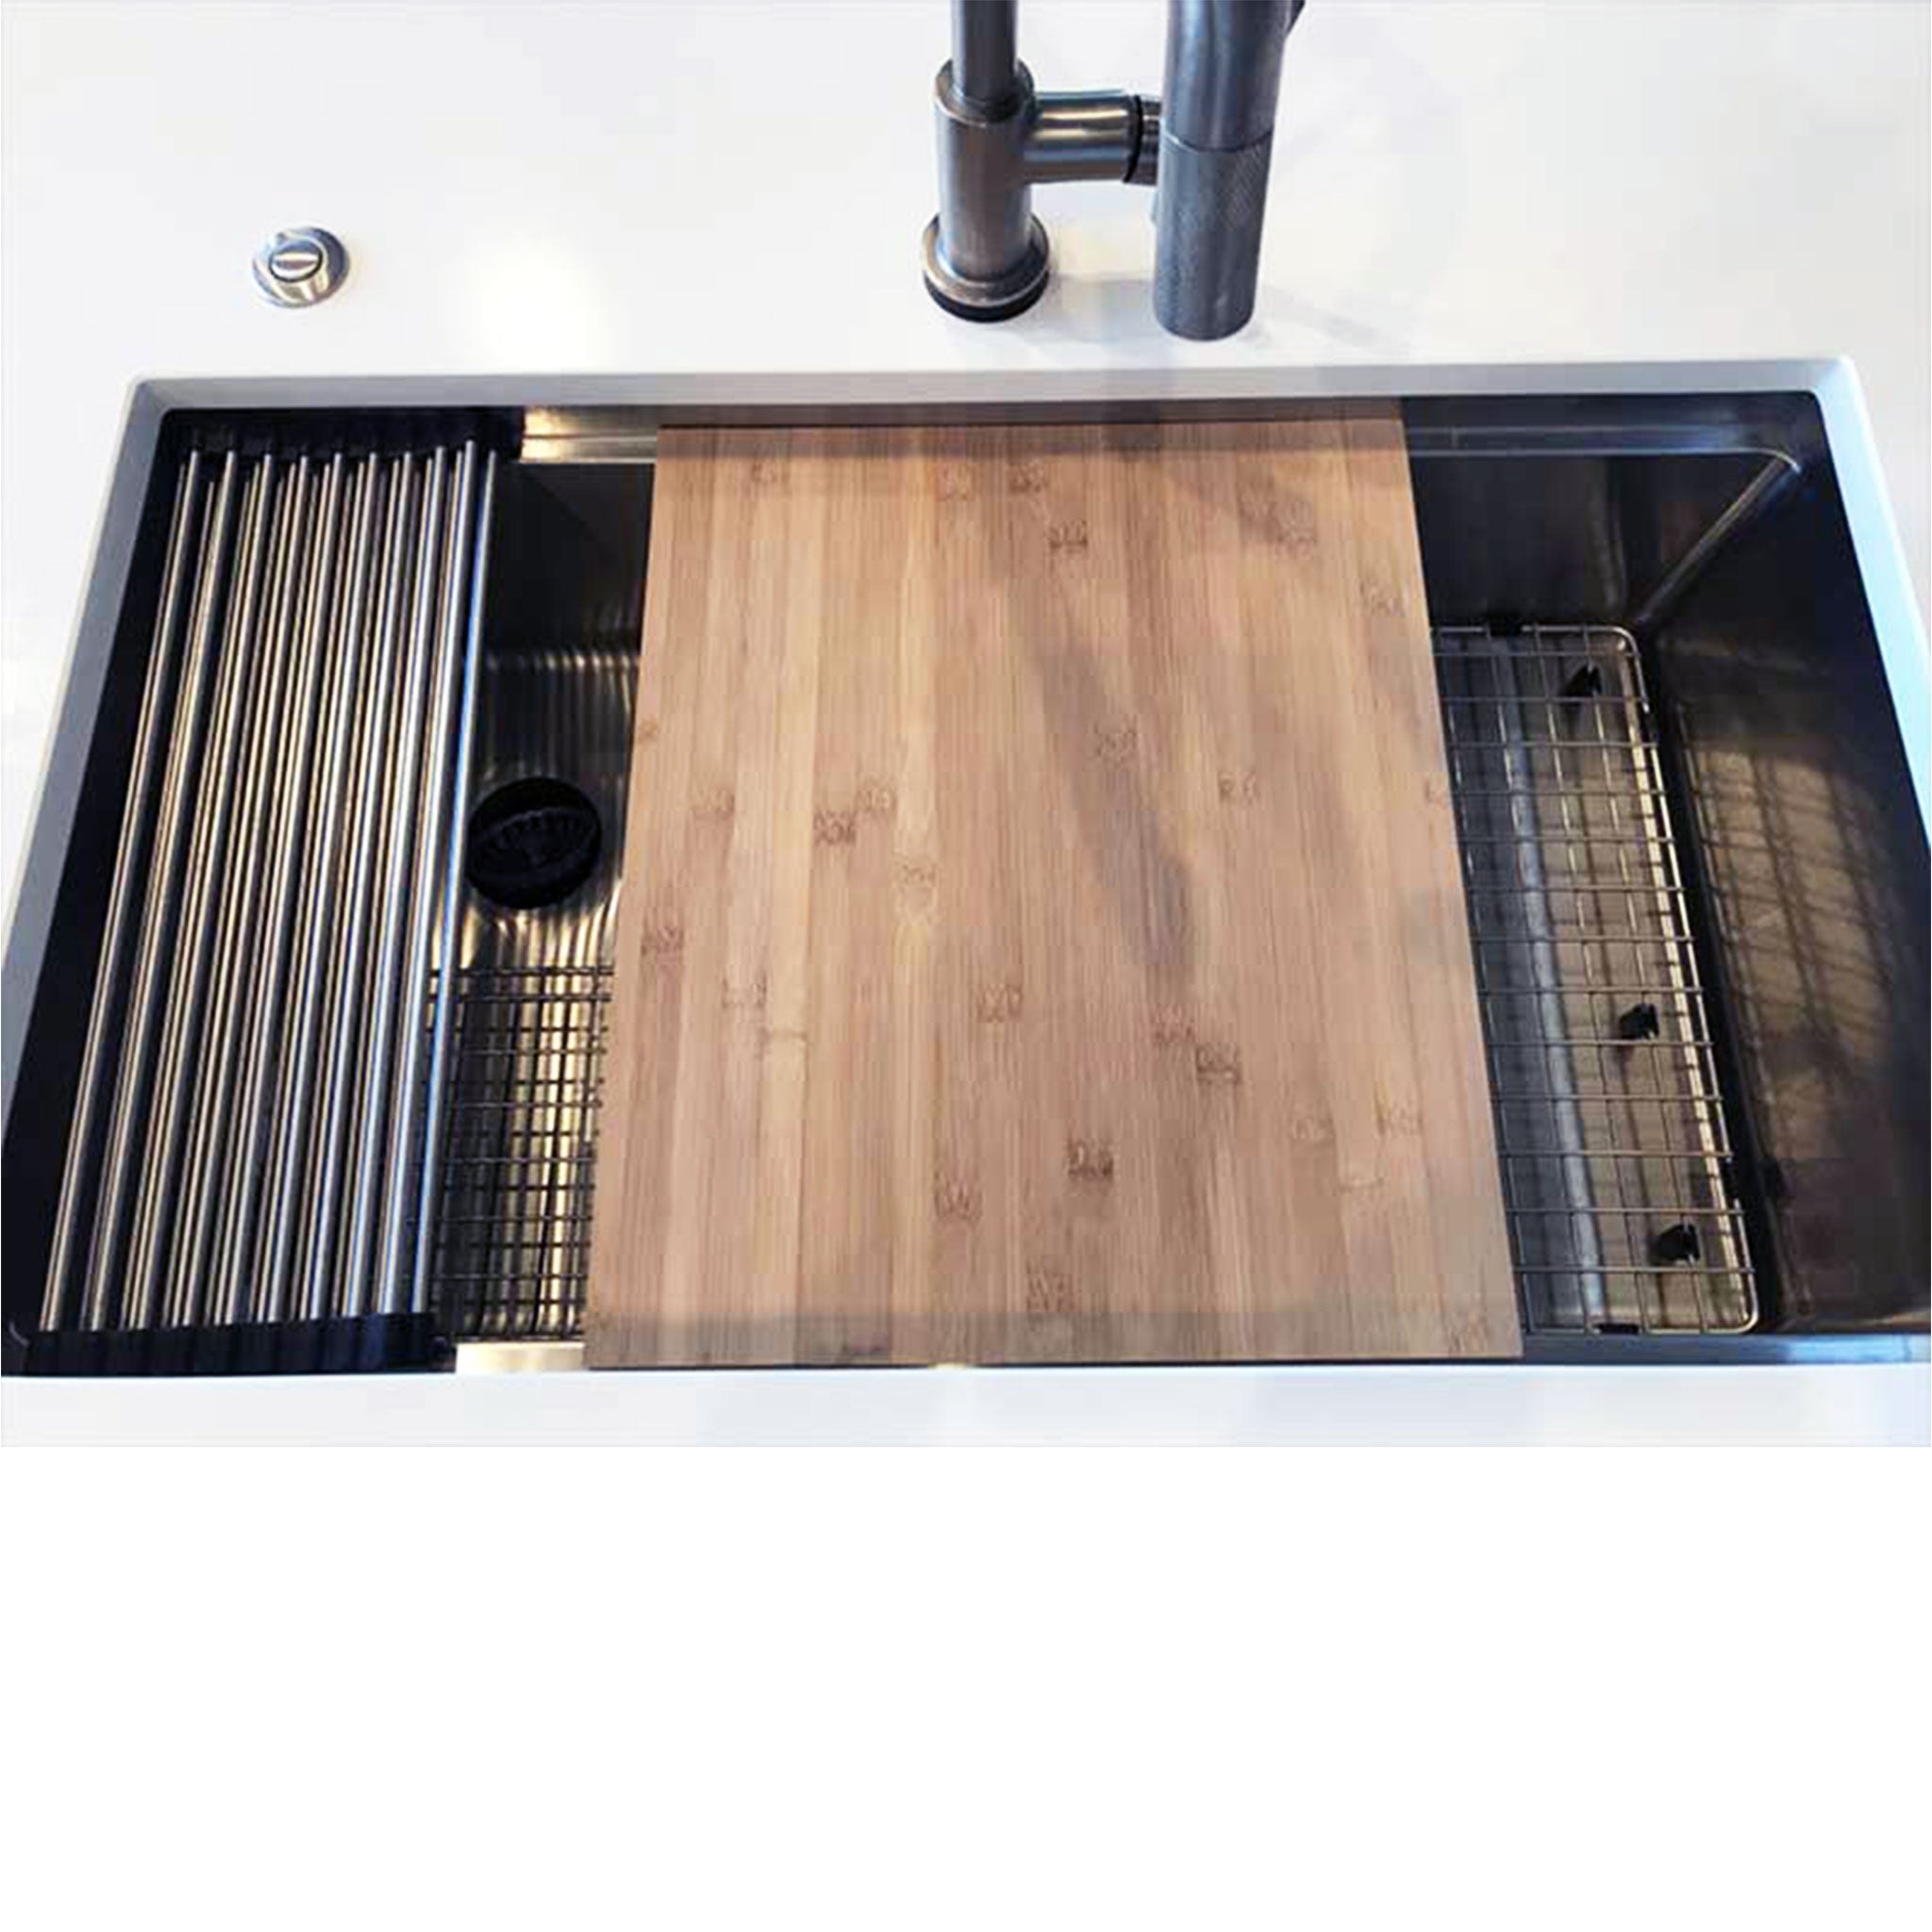 Workstation Sink Accessory - 15" Bamboo Cutting Board